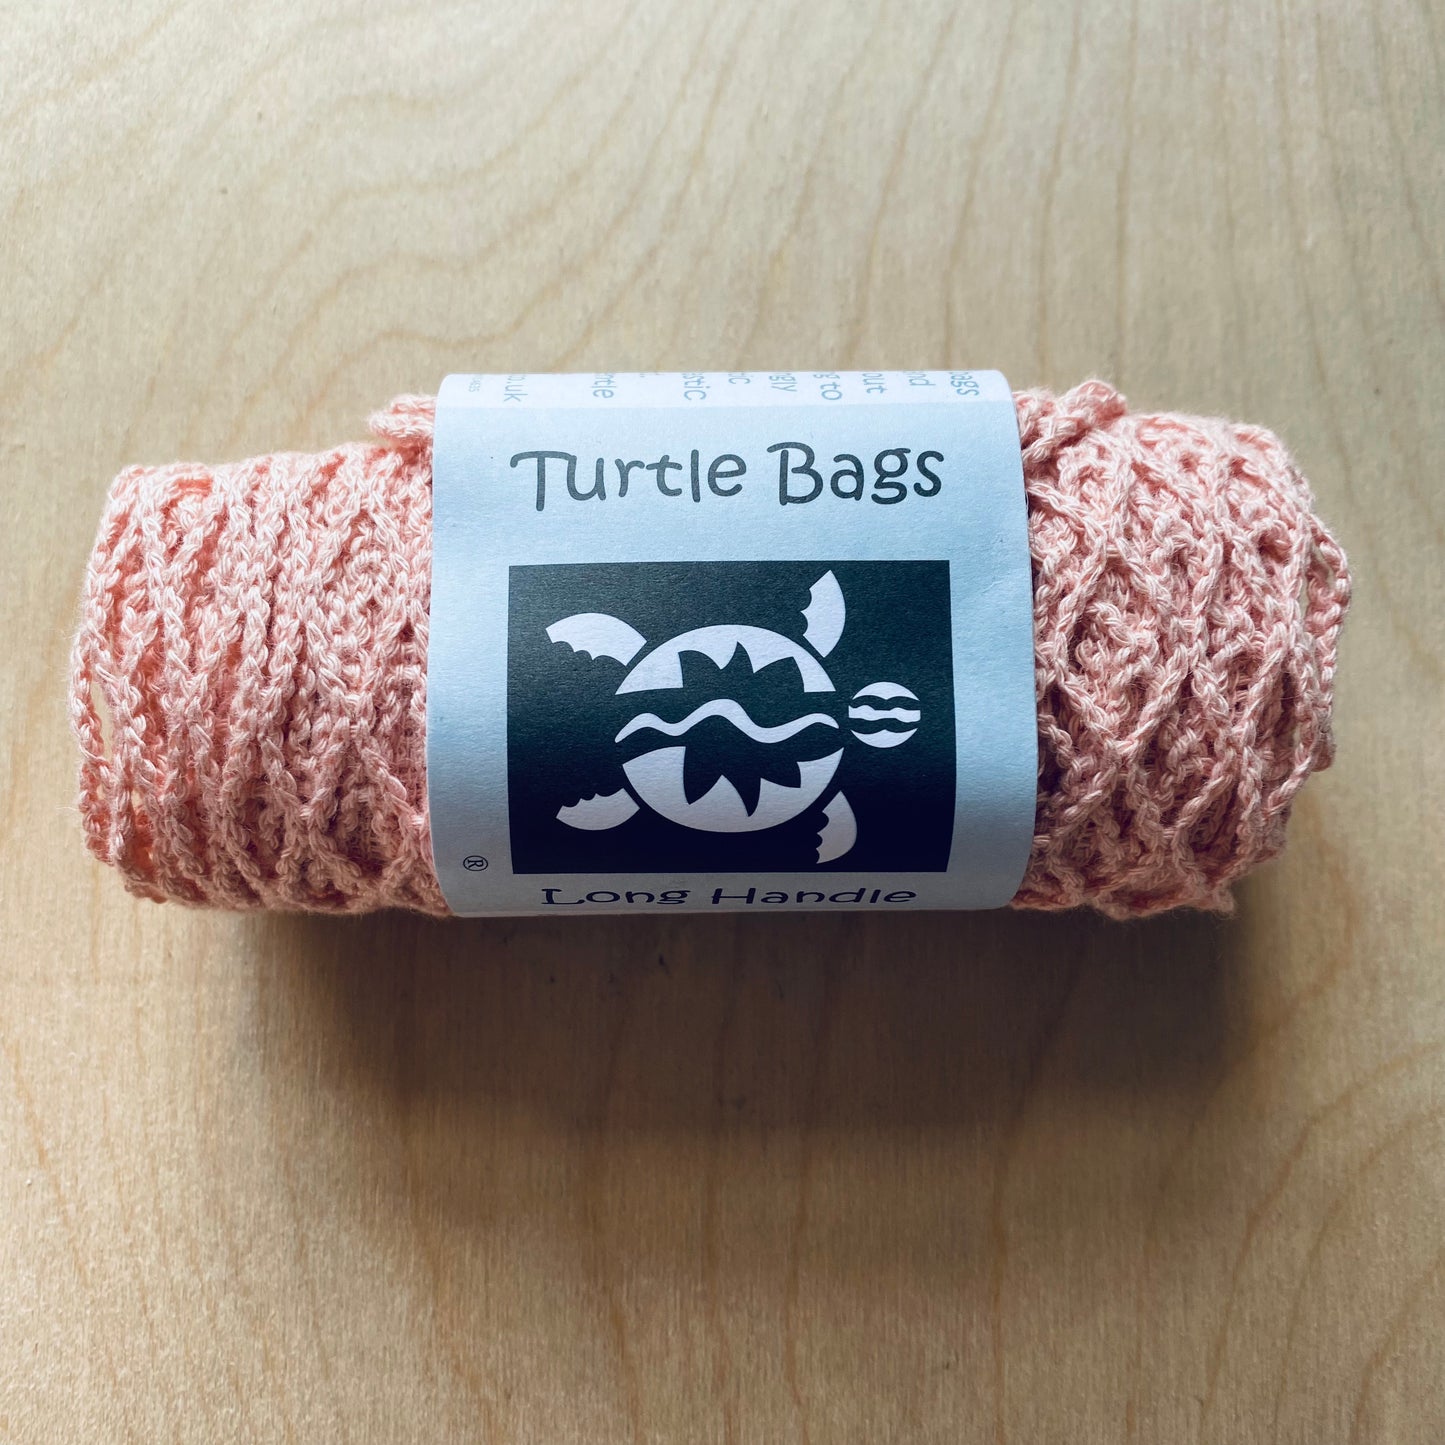 Long Handled Organic Cotton String Bag - Dusty Pink